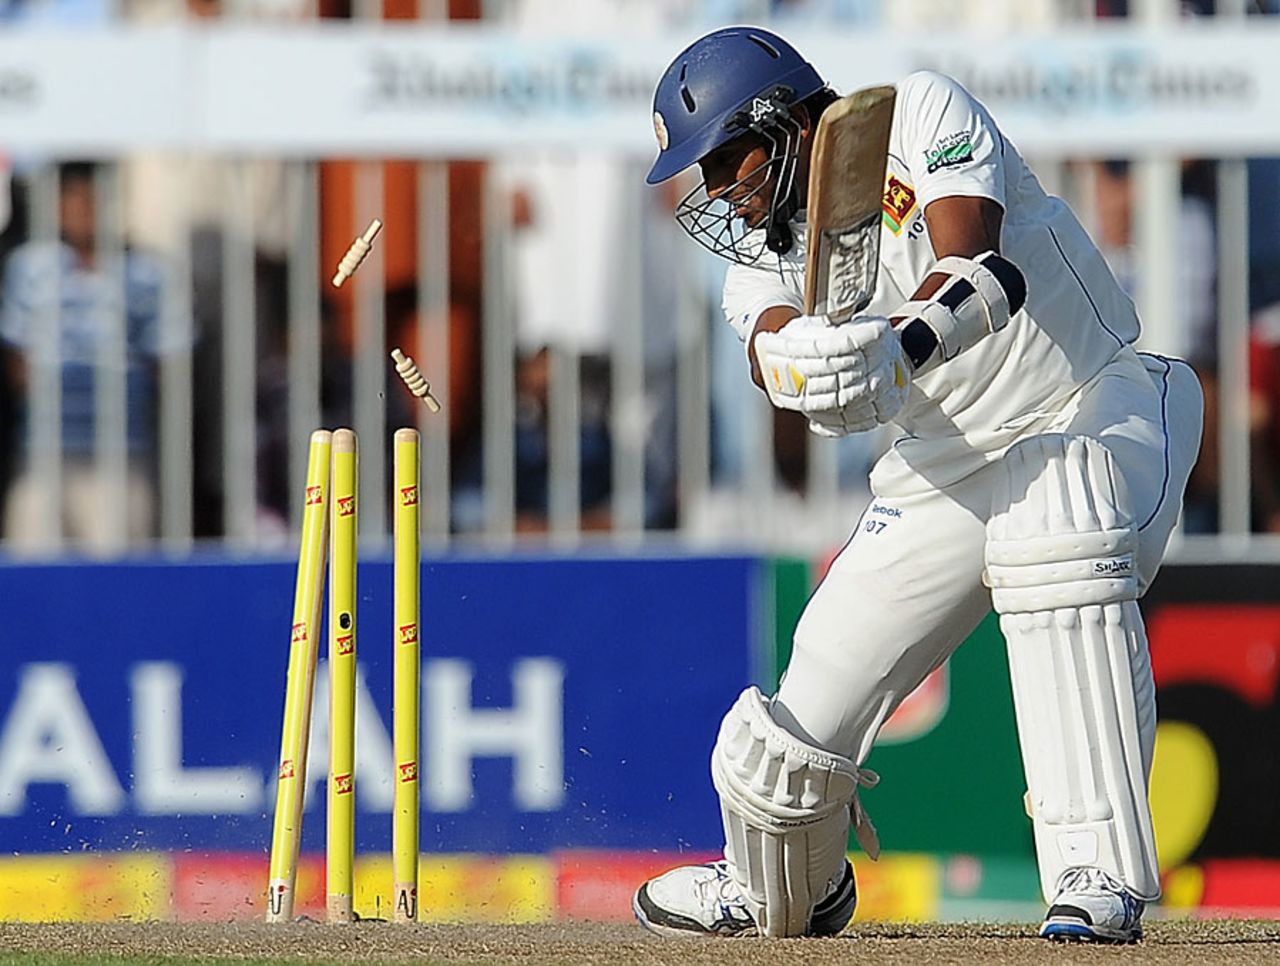 Chanaka Welegedara is yorked by Umar Gul, Pakistan v Sri Lanka, 3rd Test, Sharjah, 2nd day, November 4, 2011